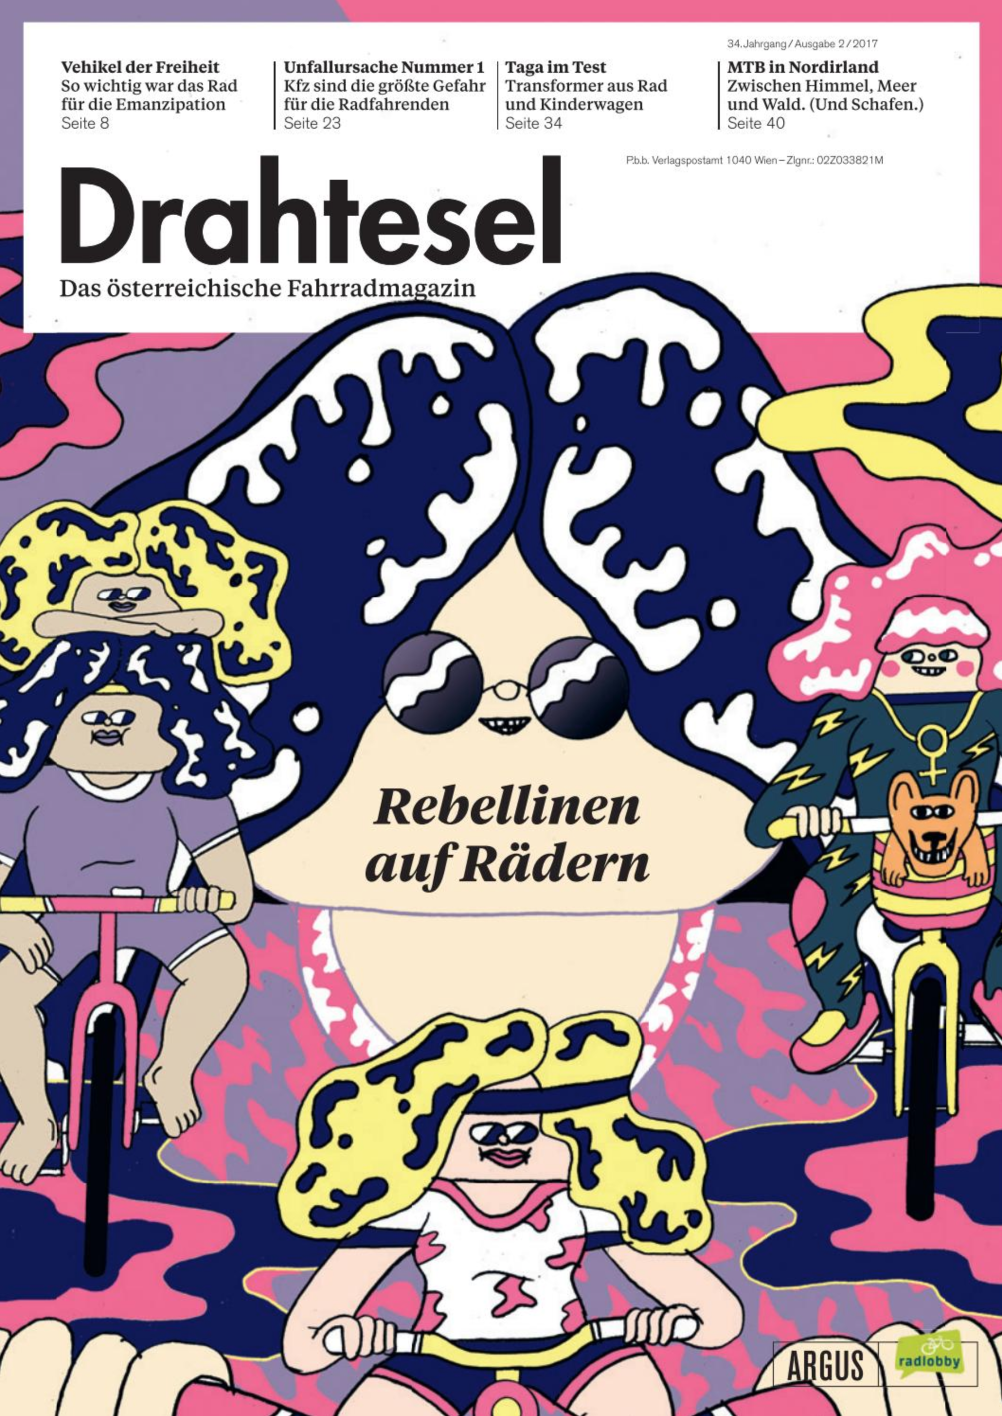 Drahtesel Cover 2/2017